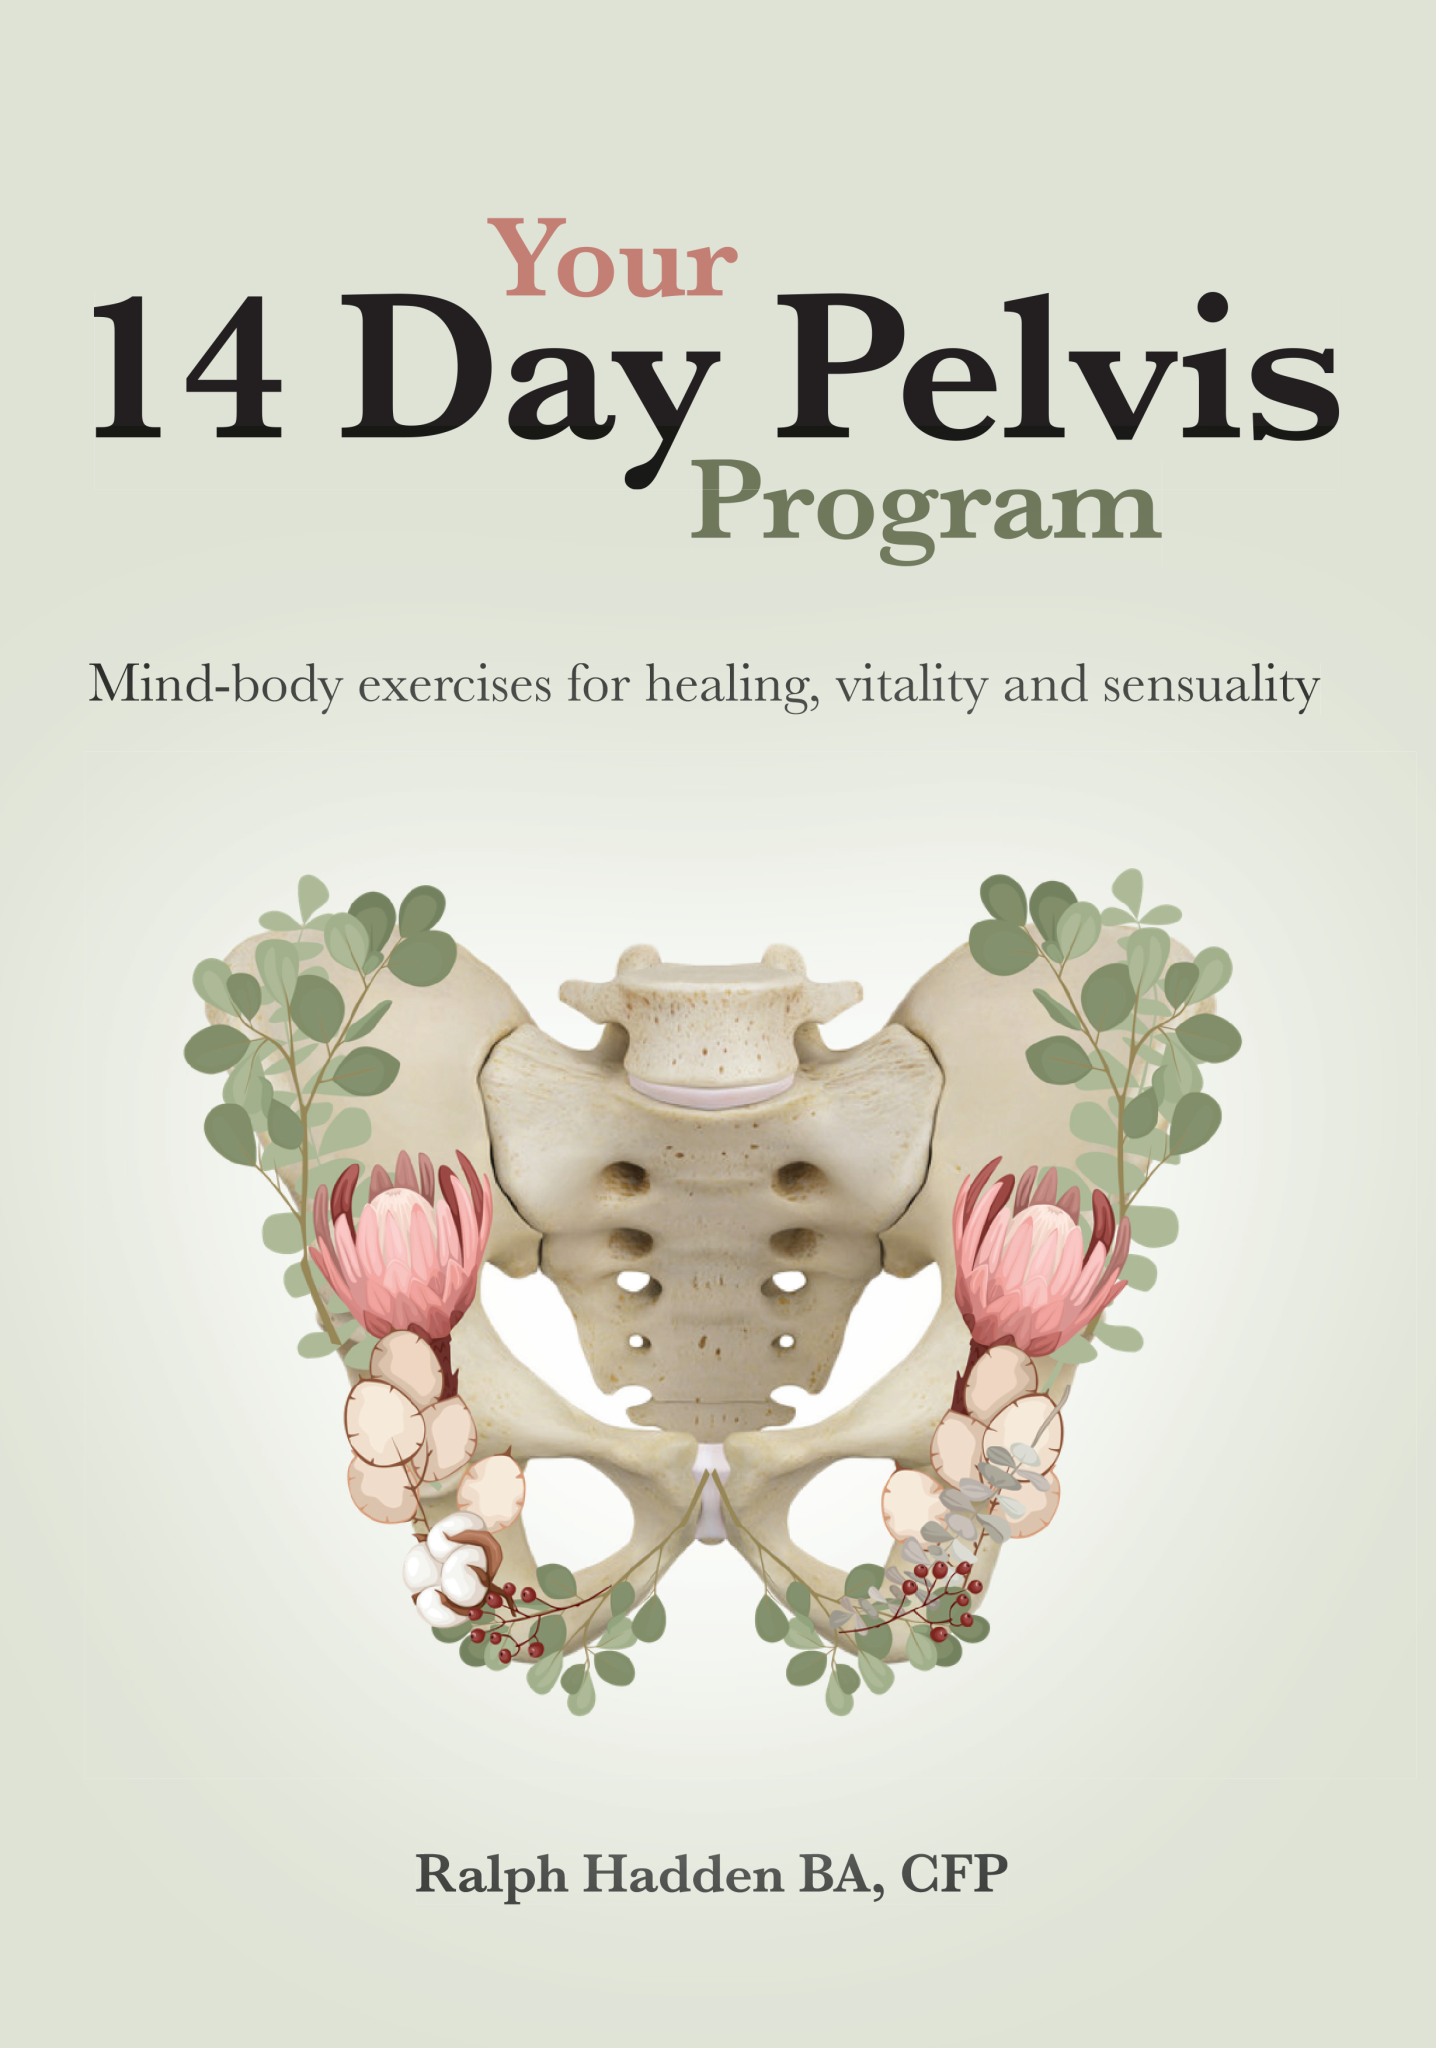 Your 14 Day Pelvis Program